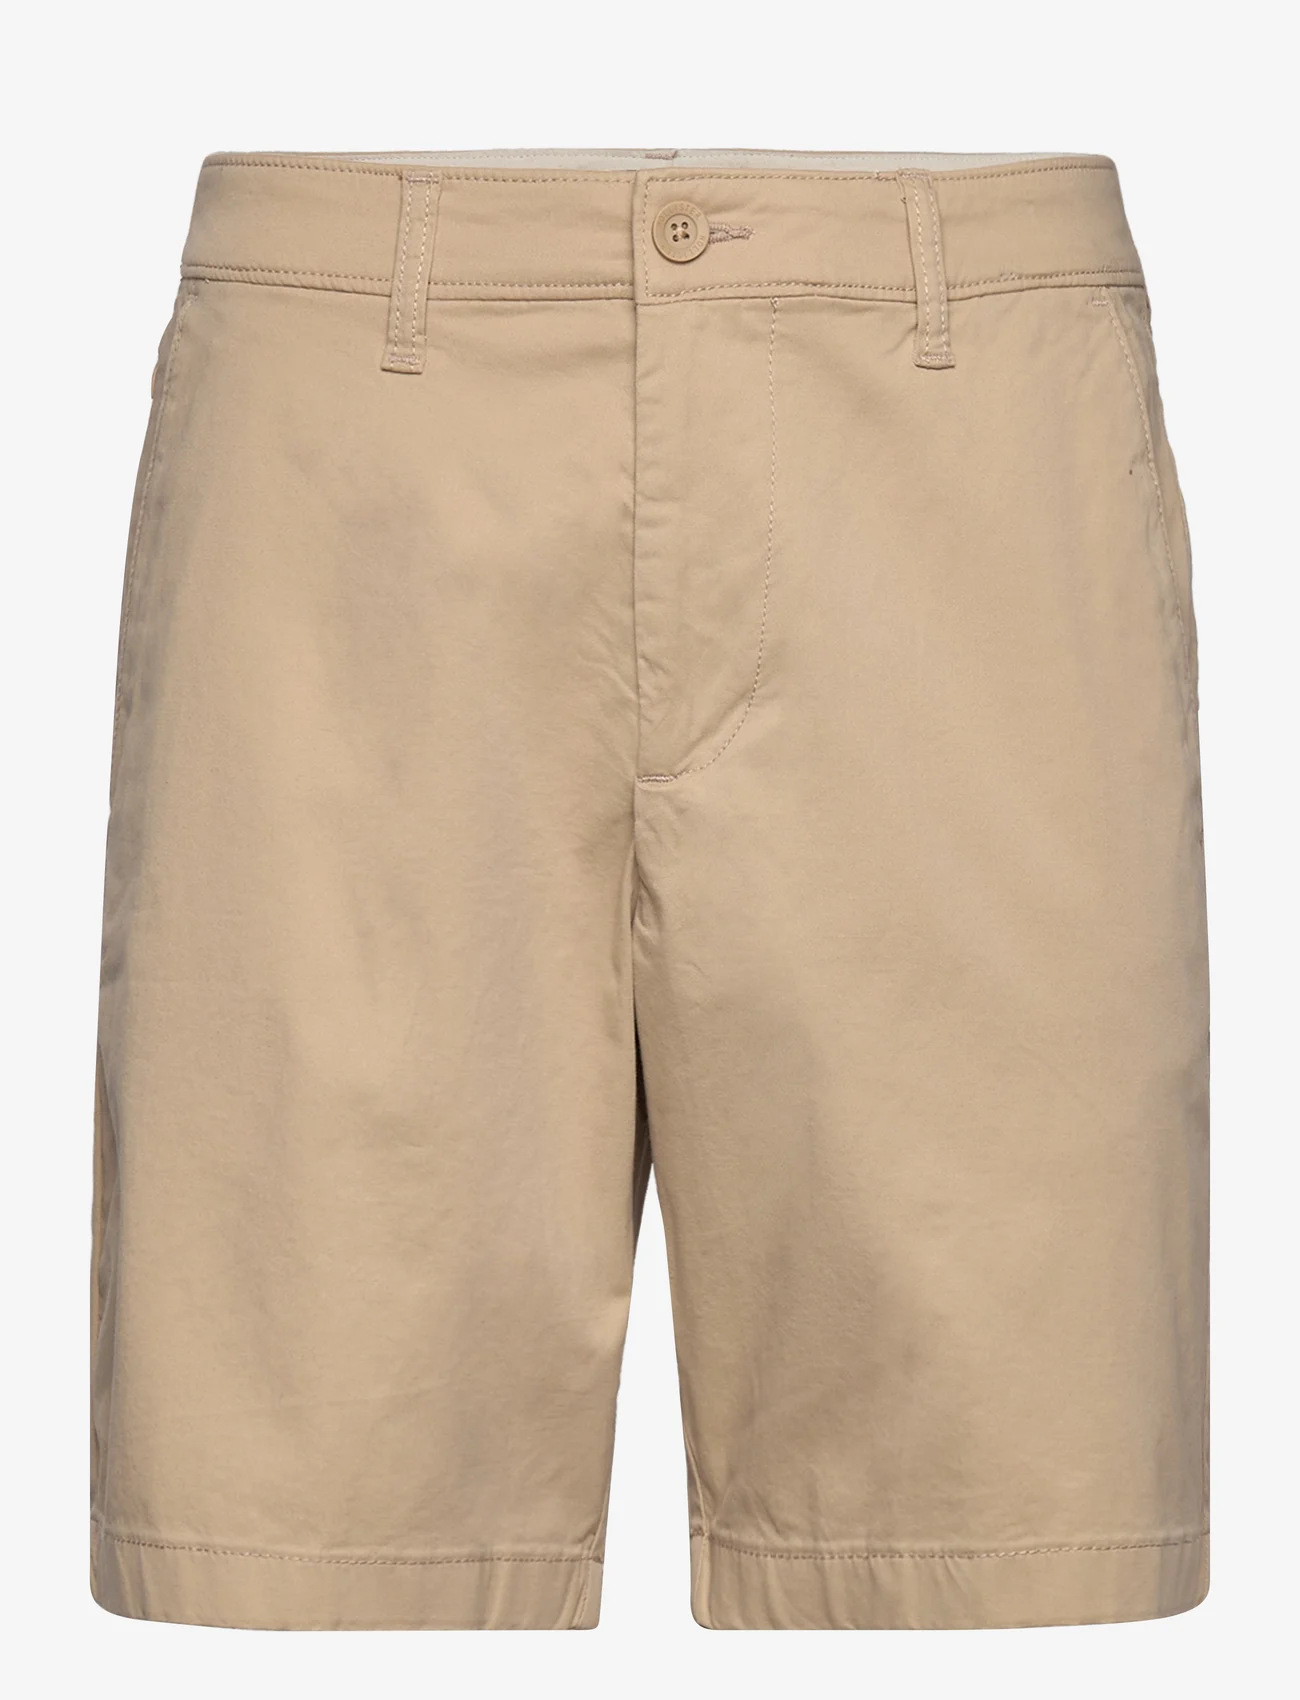 Hollister - HCo. GUYS SHORTS - chino shorts - safari - 0